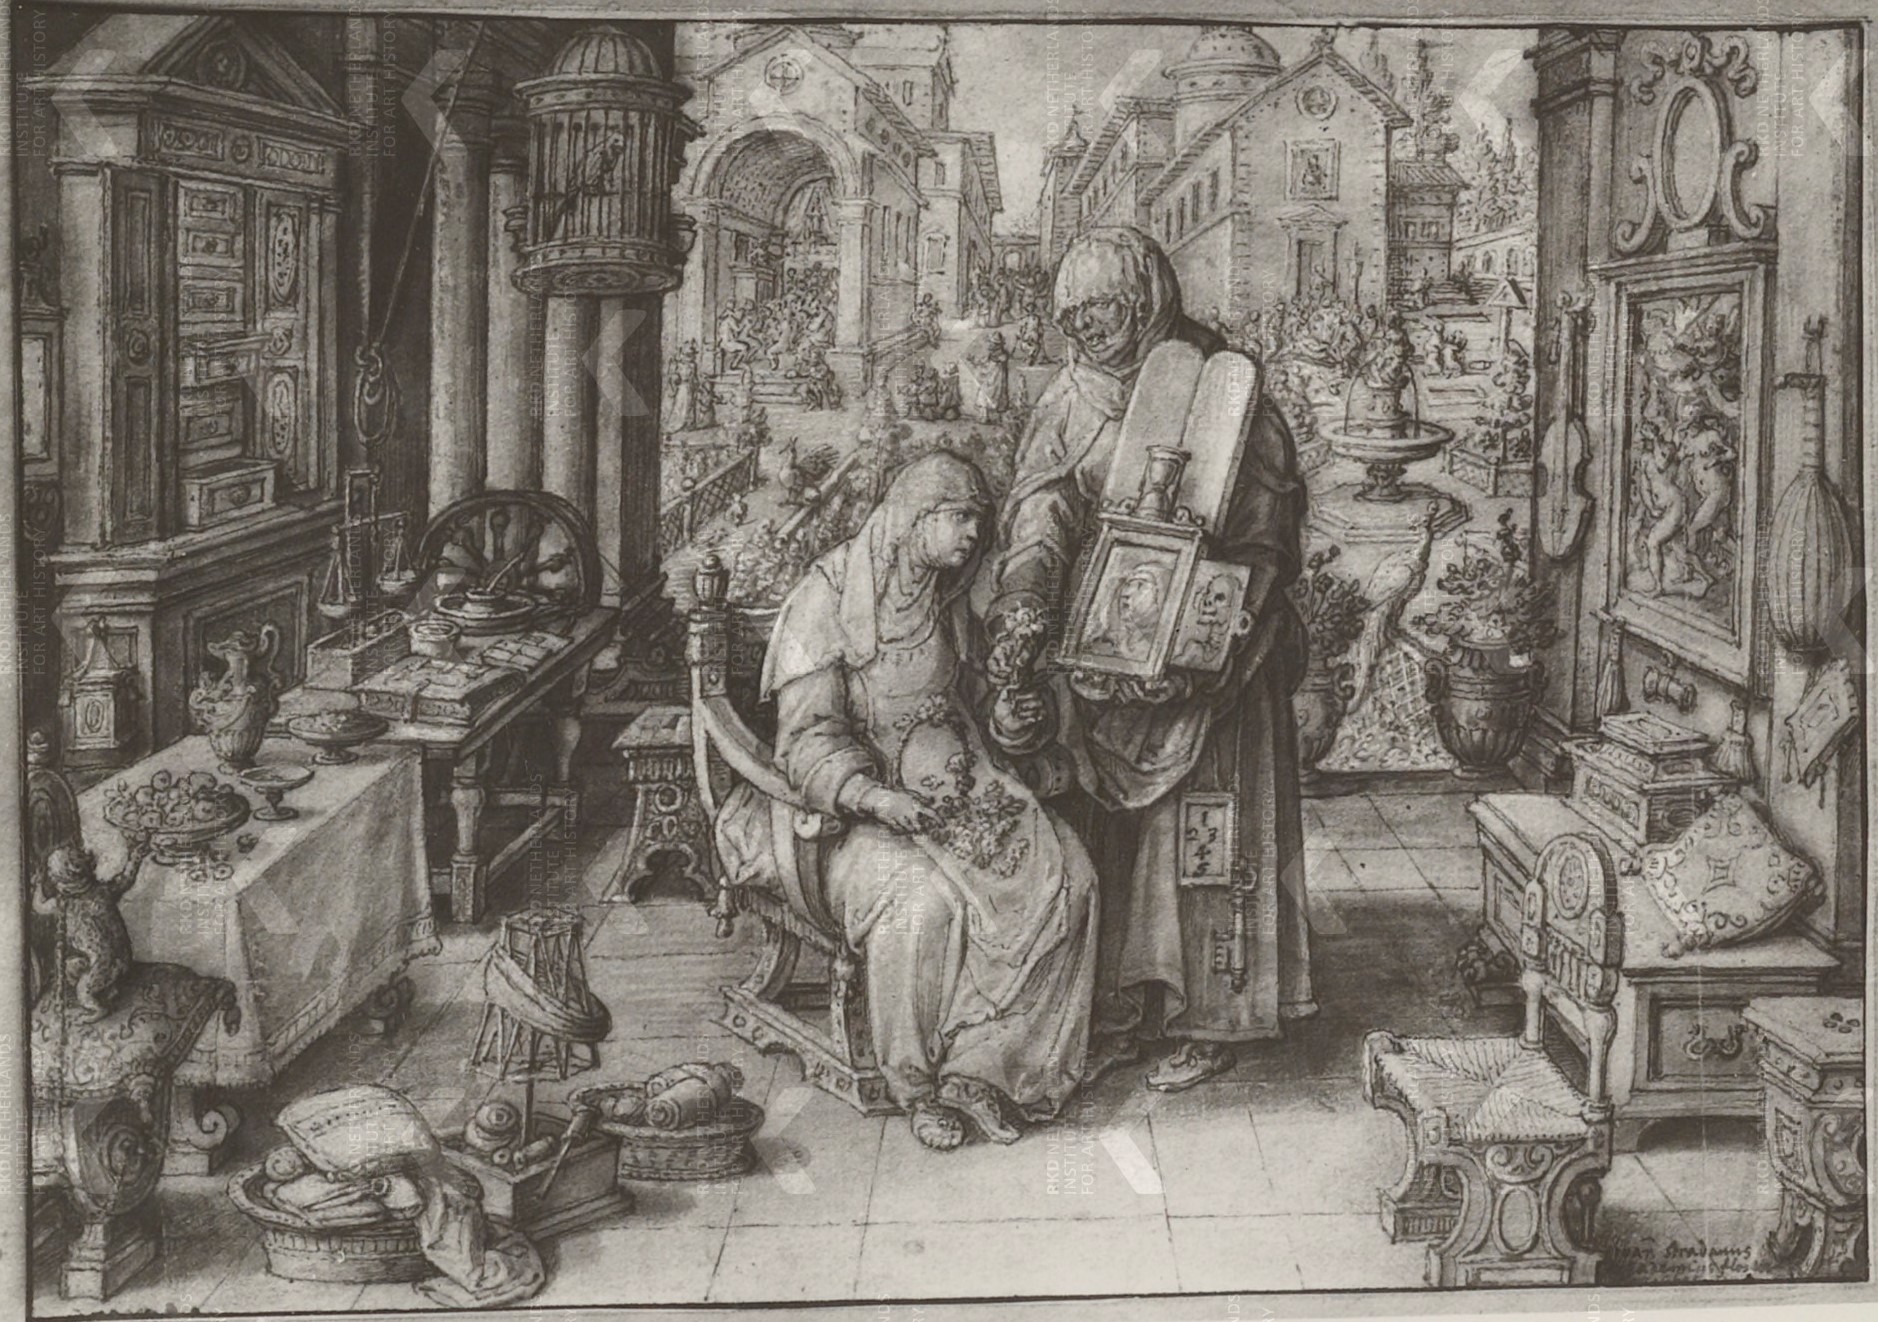 1594, Jan van der Straet (Stradanus), Teyler Museum, Haarlem Quand tu es jeune, pense à la mort